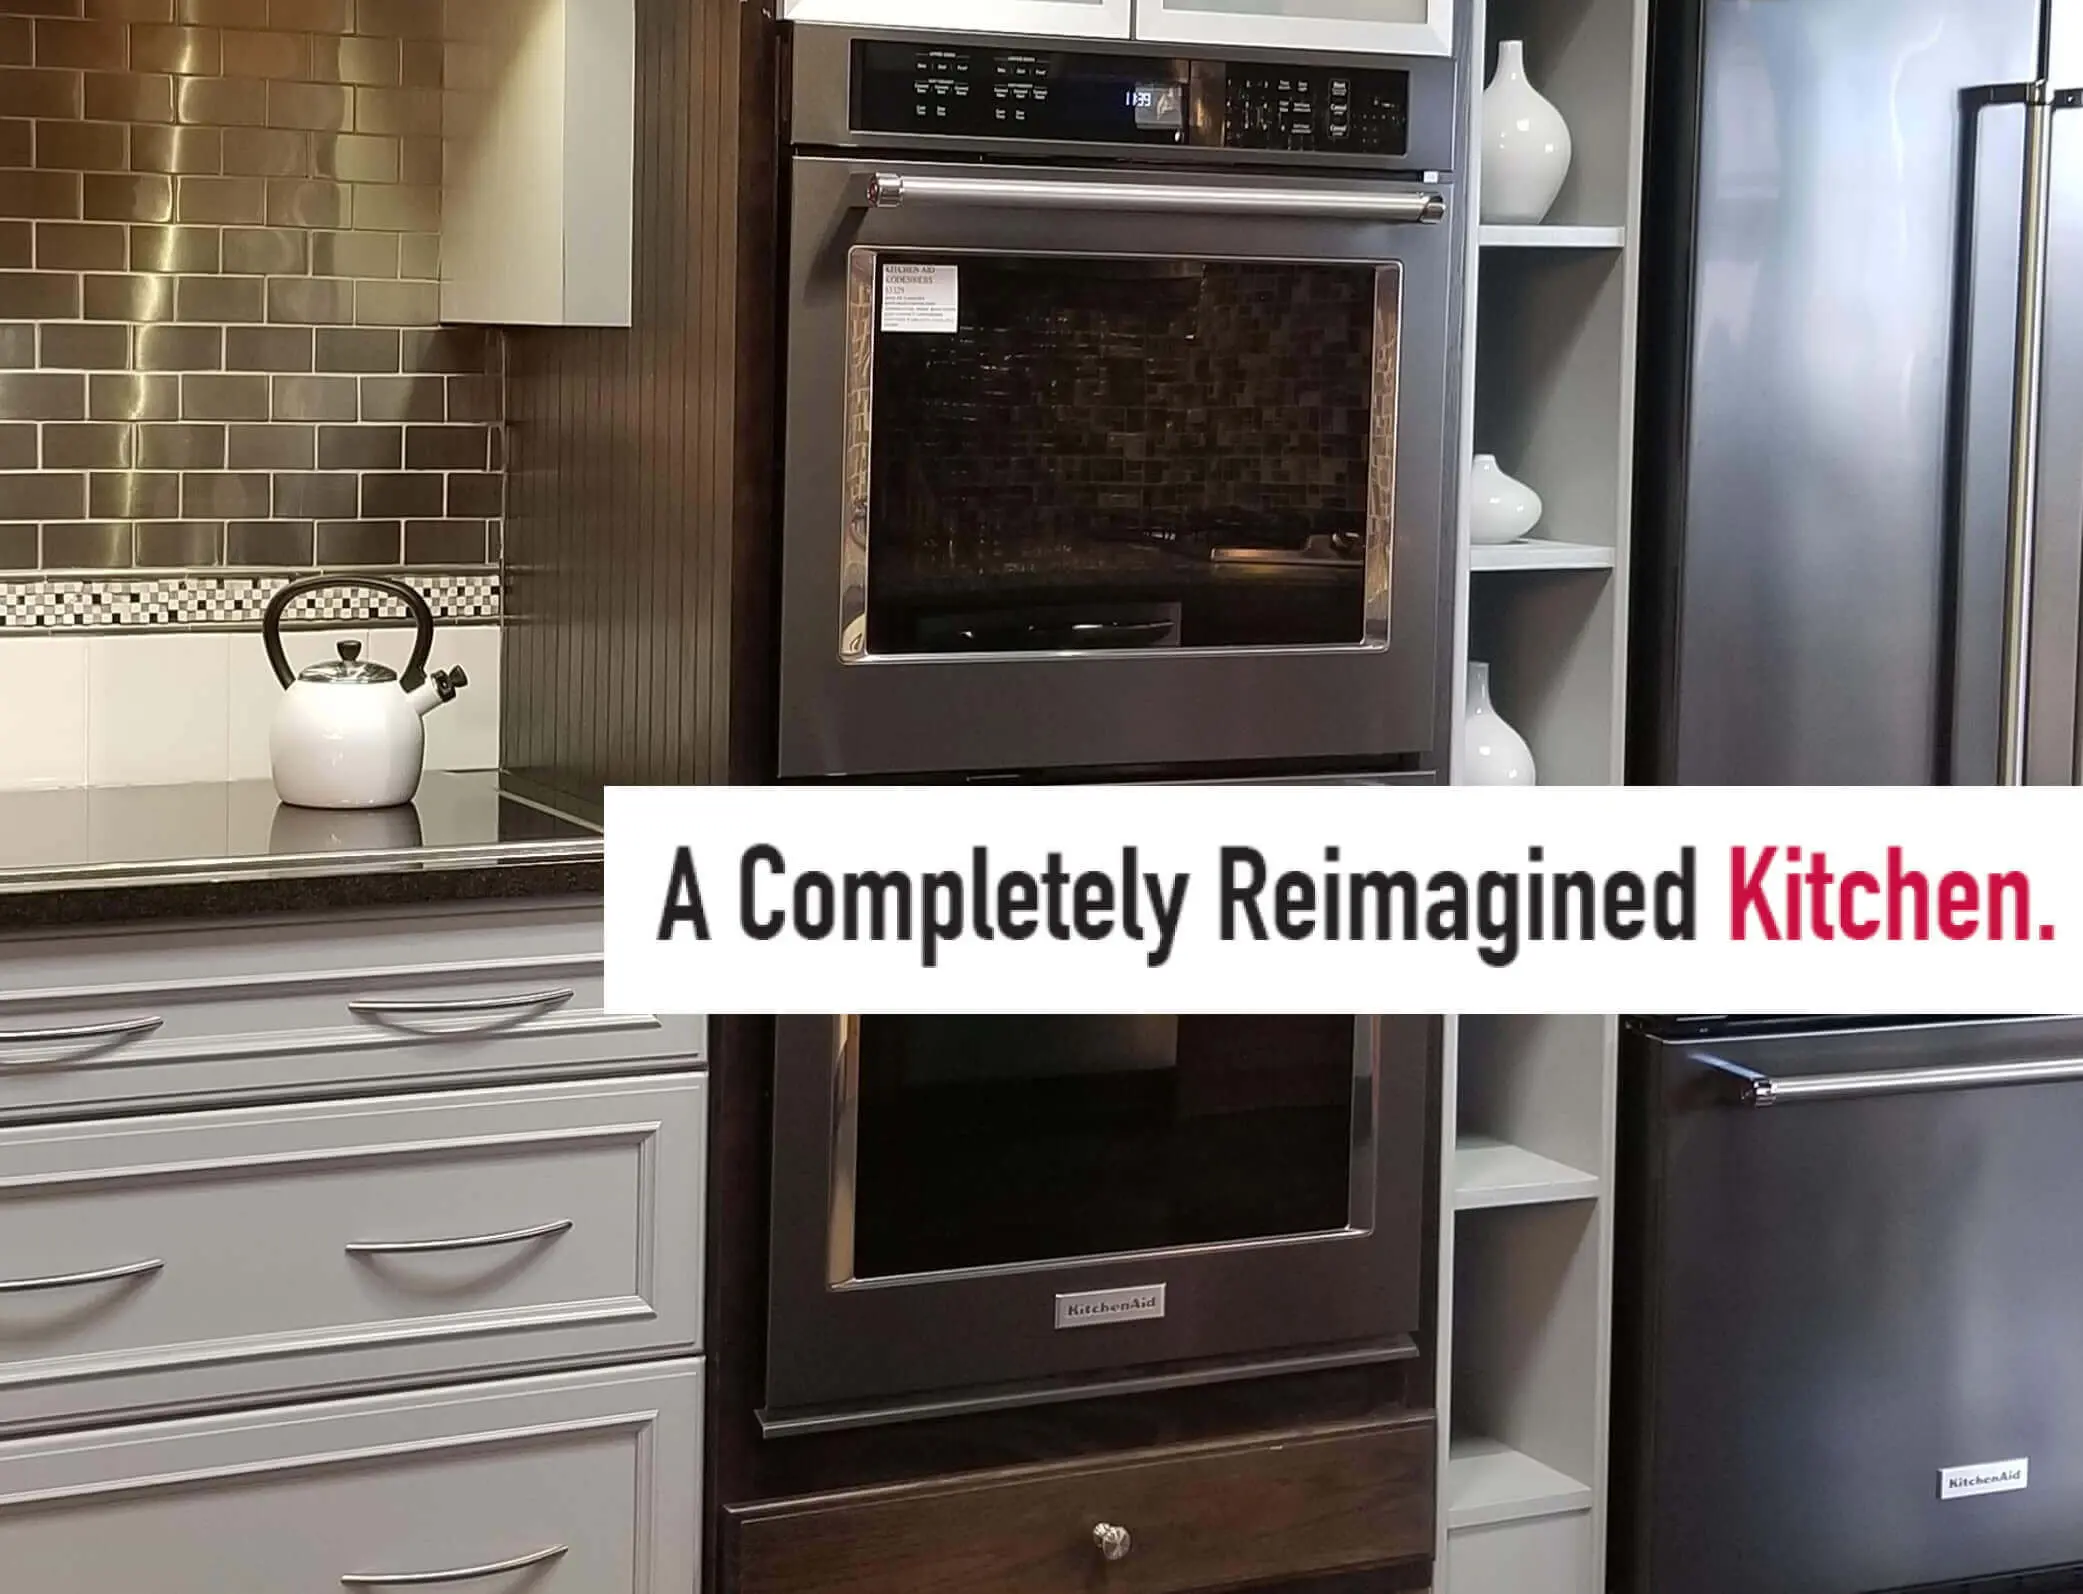 Discover KitchenAid Major Appliances | Capital Distributing 214.638.2681